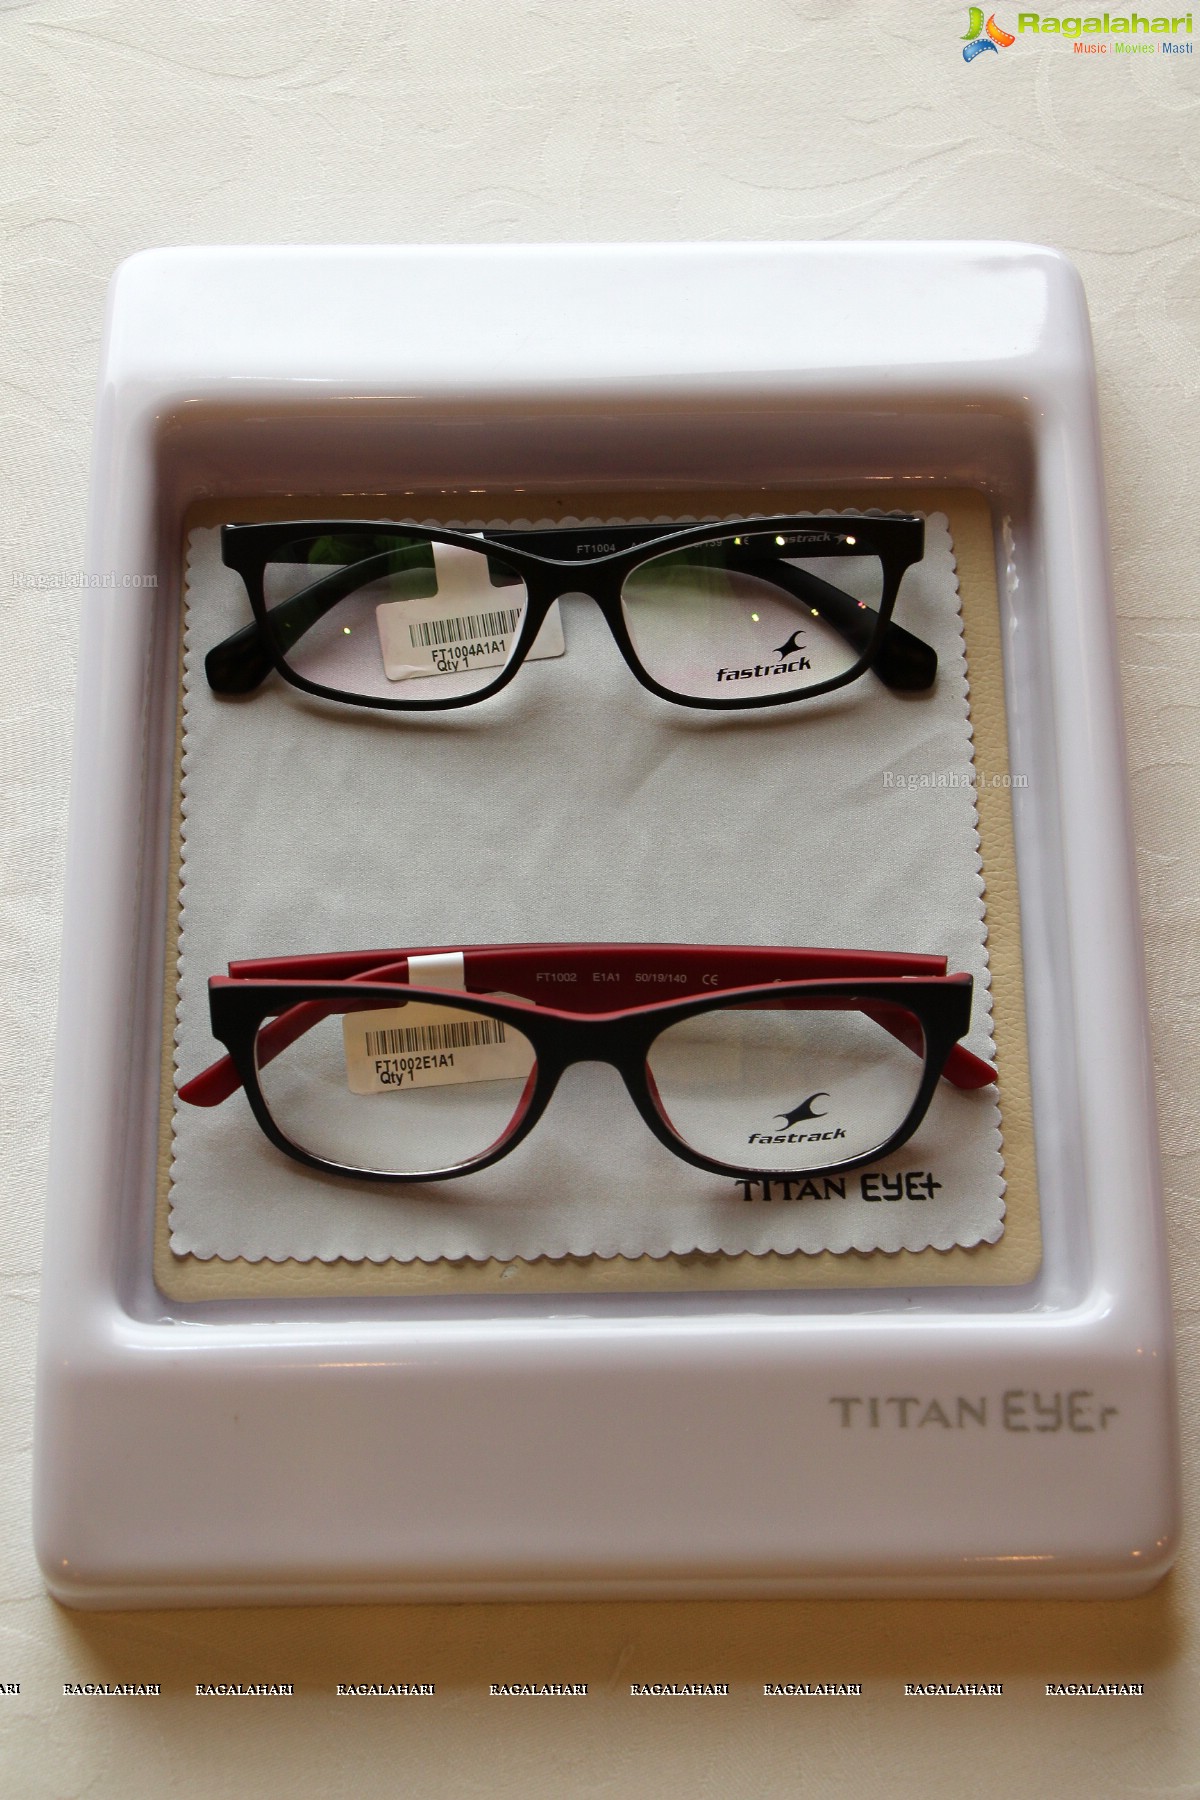 Titan Eye Plus Store Launch at Jubilee Hills, Hyderabad